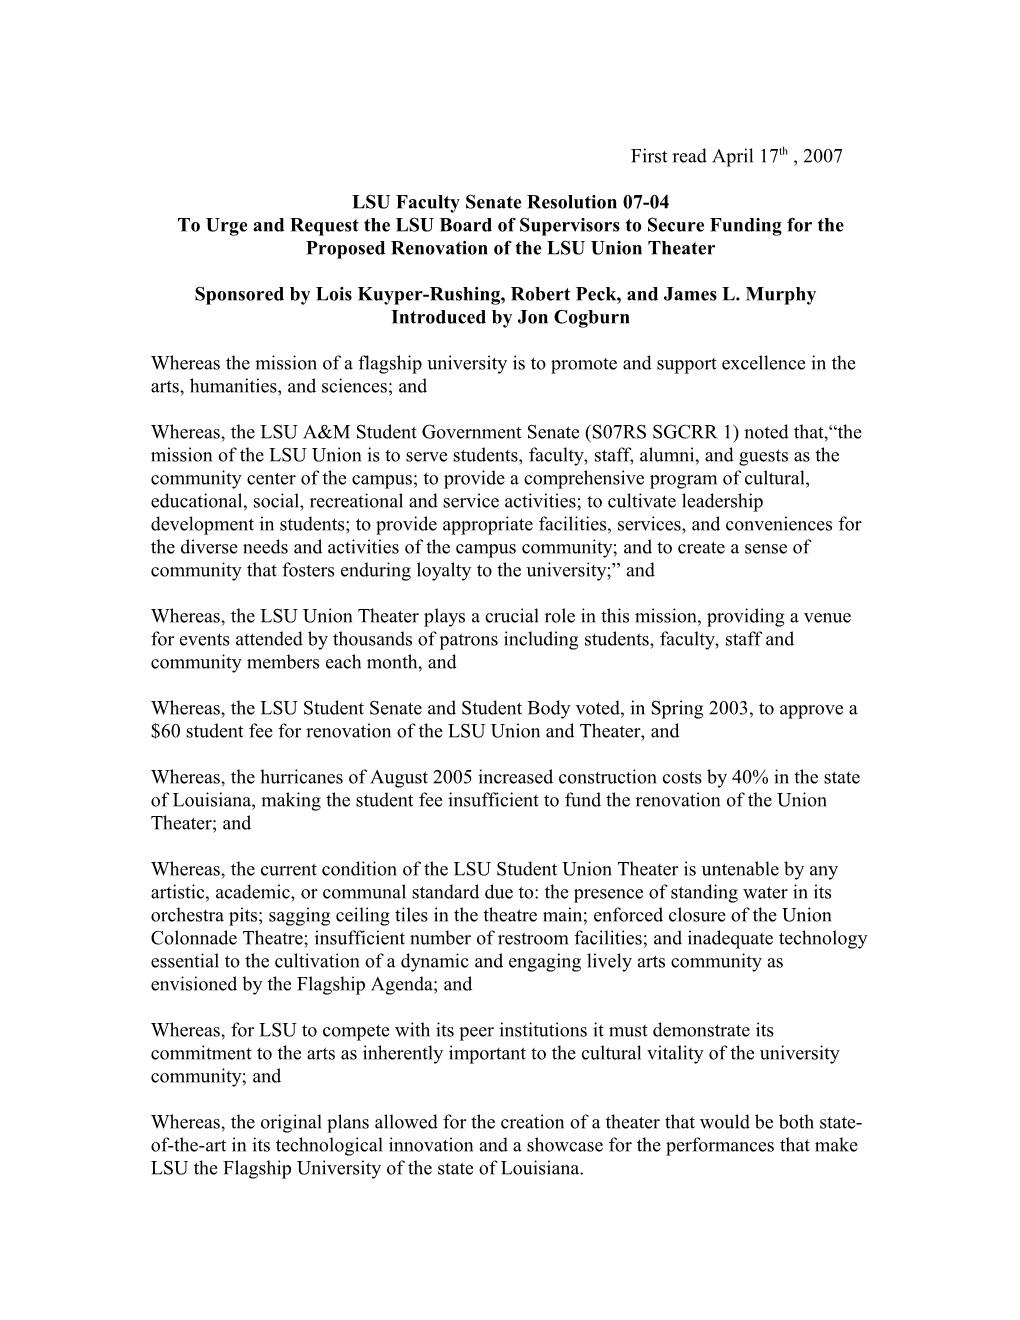 LSU Faculty Senate Resolution 07-04